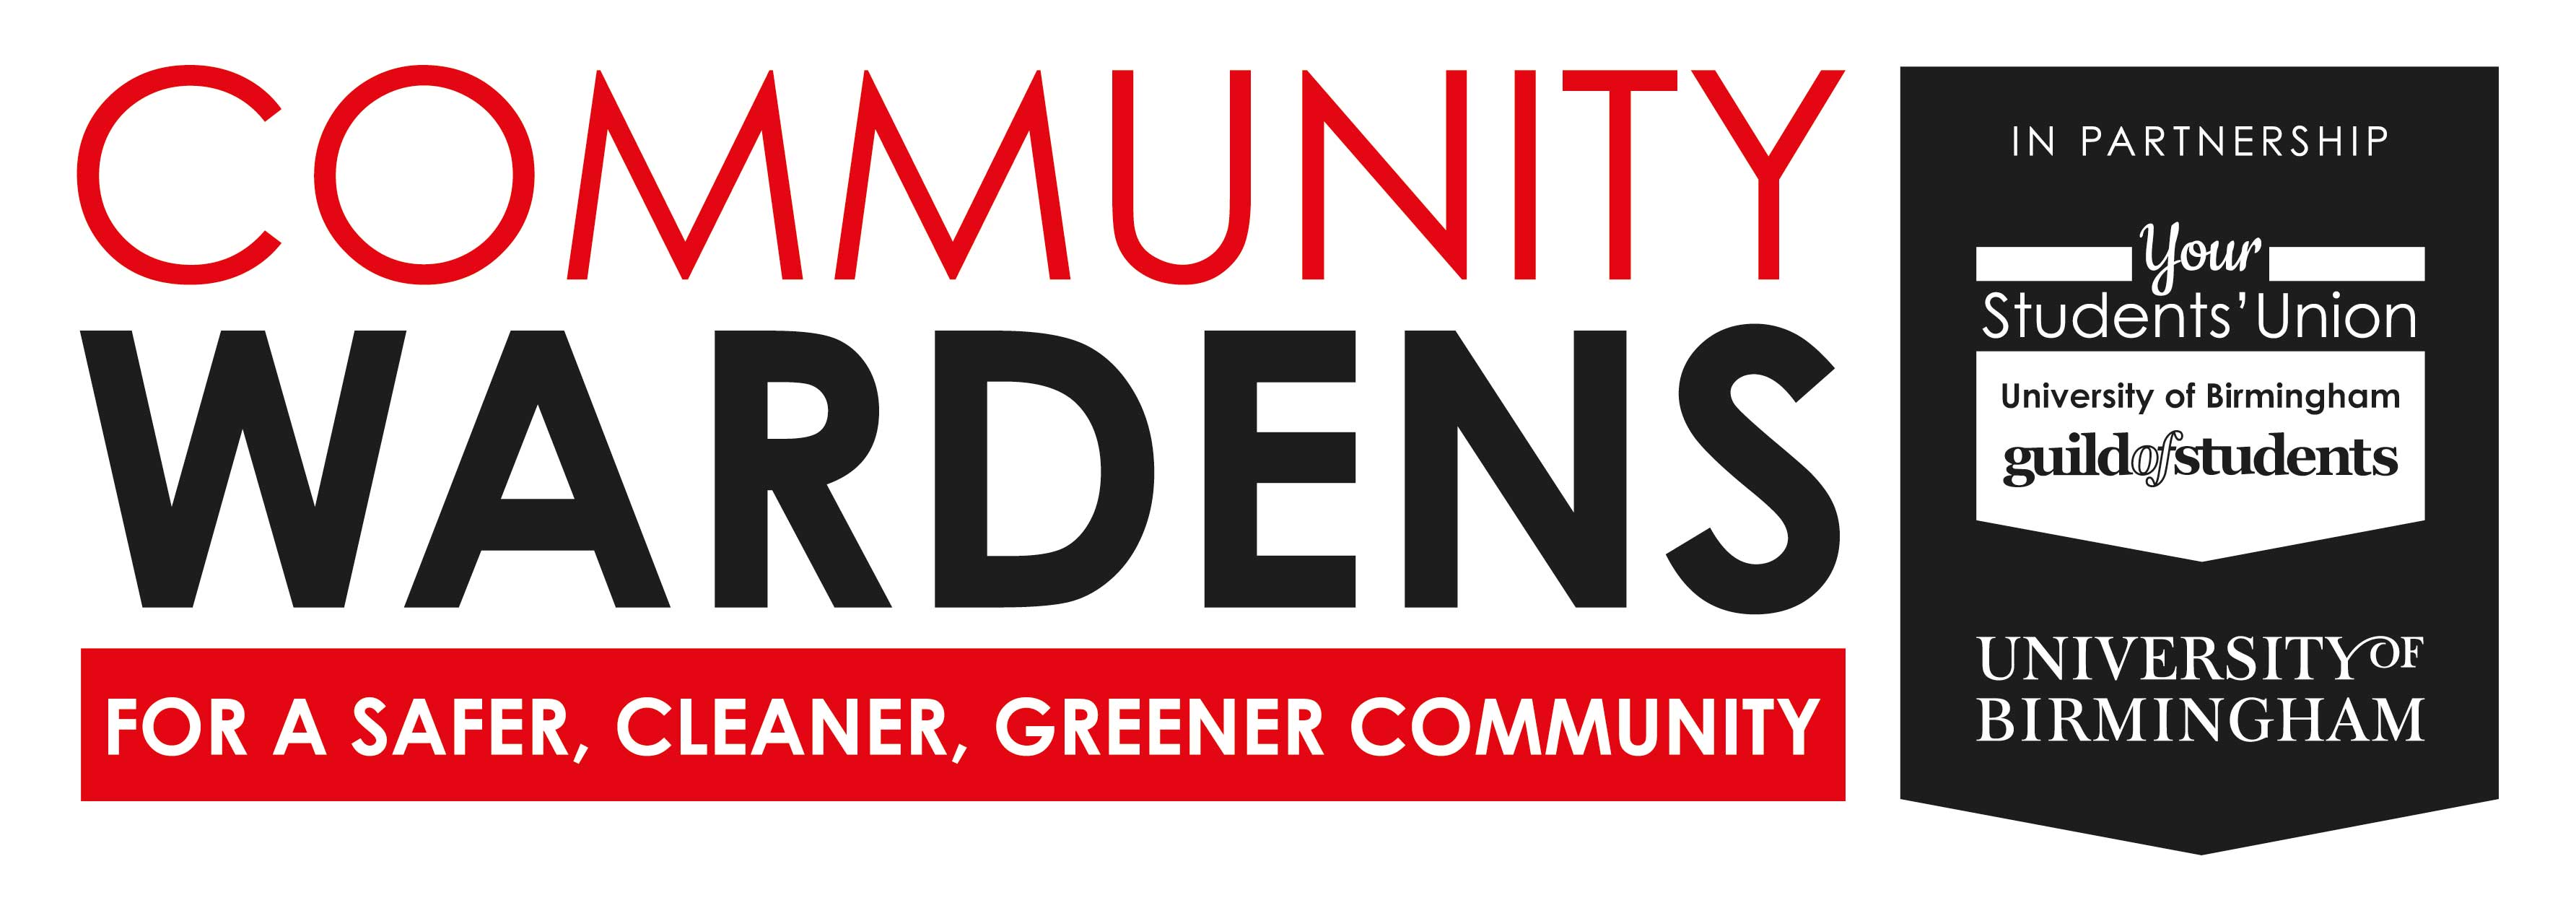 Community Wardens logo